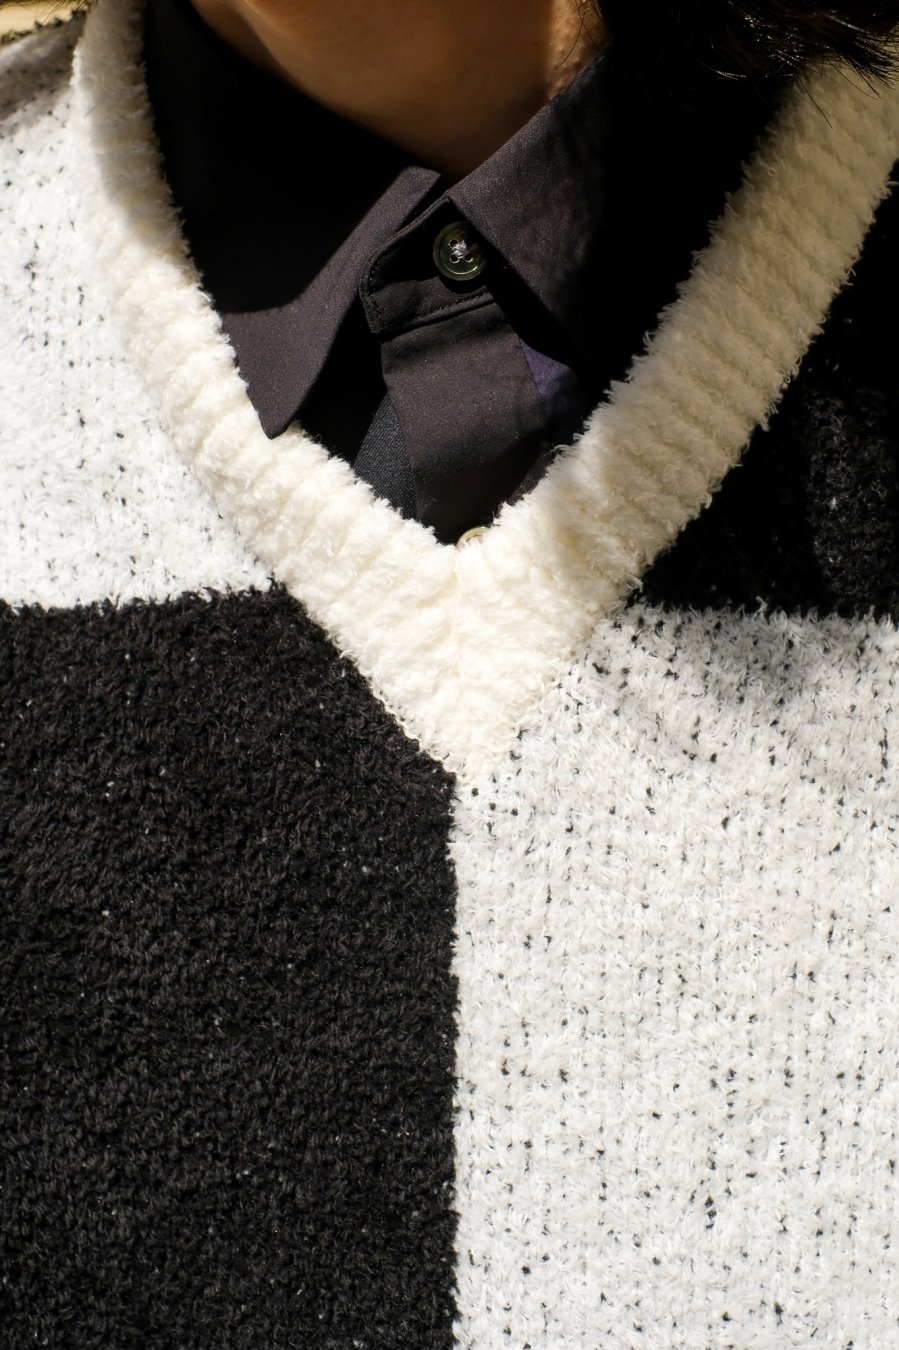 LITTLEBIG（リトルビッグ）のPattern Knit Vestの通販サイト-大阪 堀江 PALETTE art  alive（パレットアートアライヴ）-